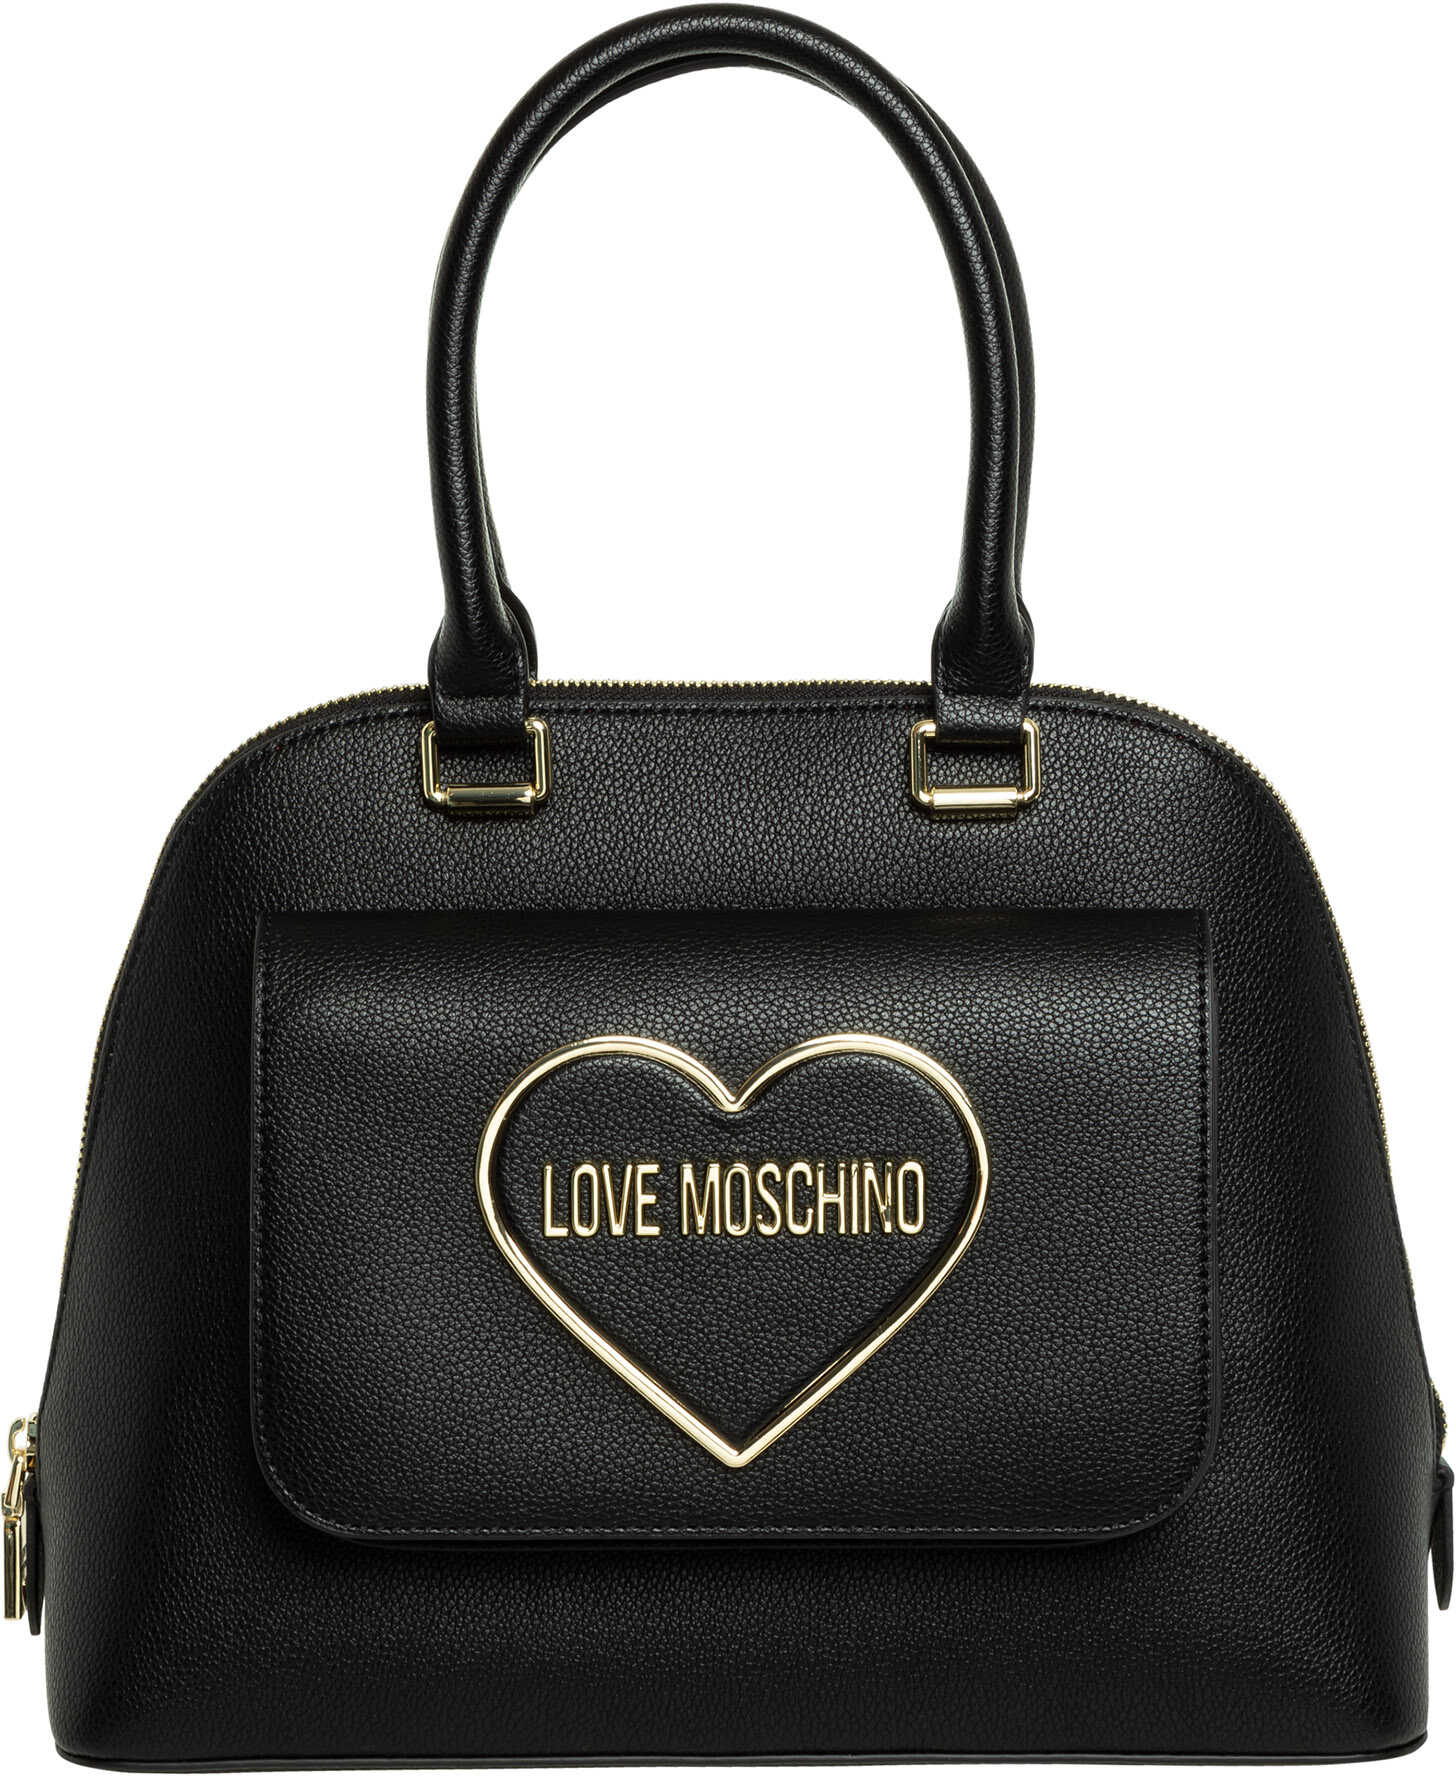 LOVE Moschino Handbag Black image5